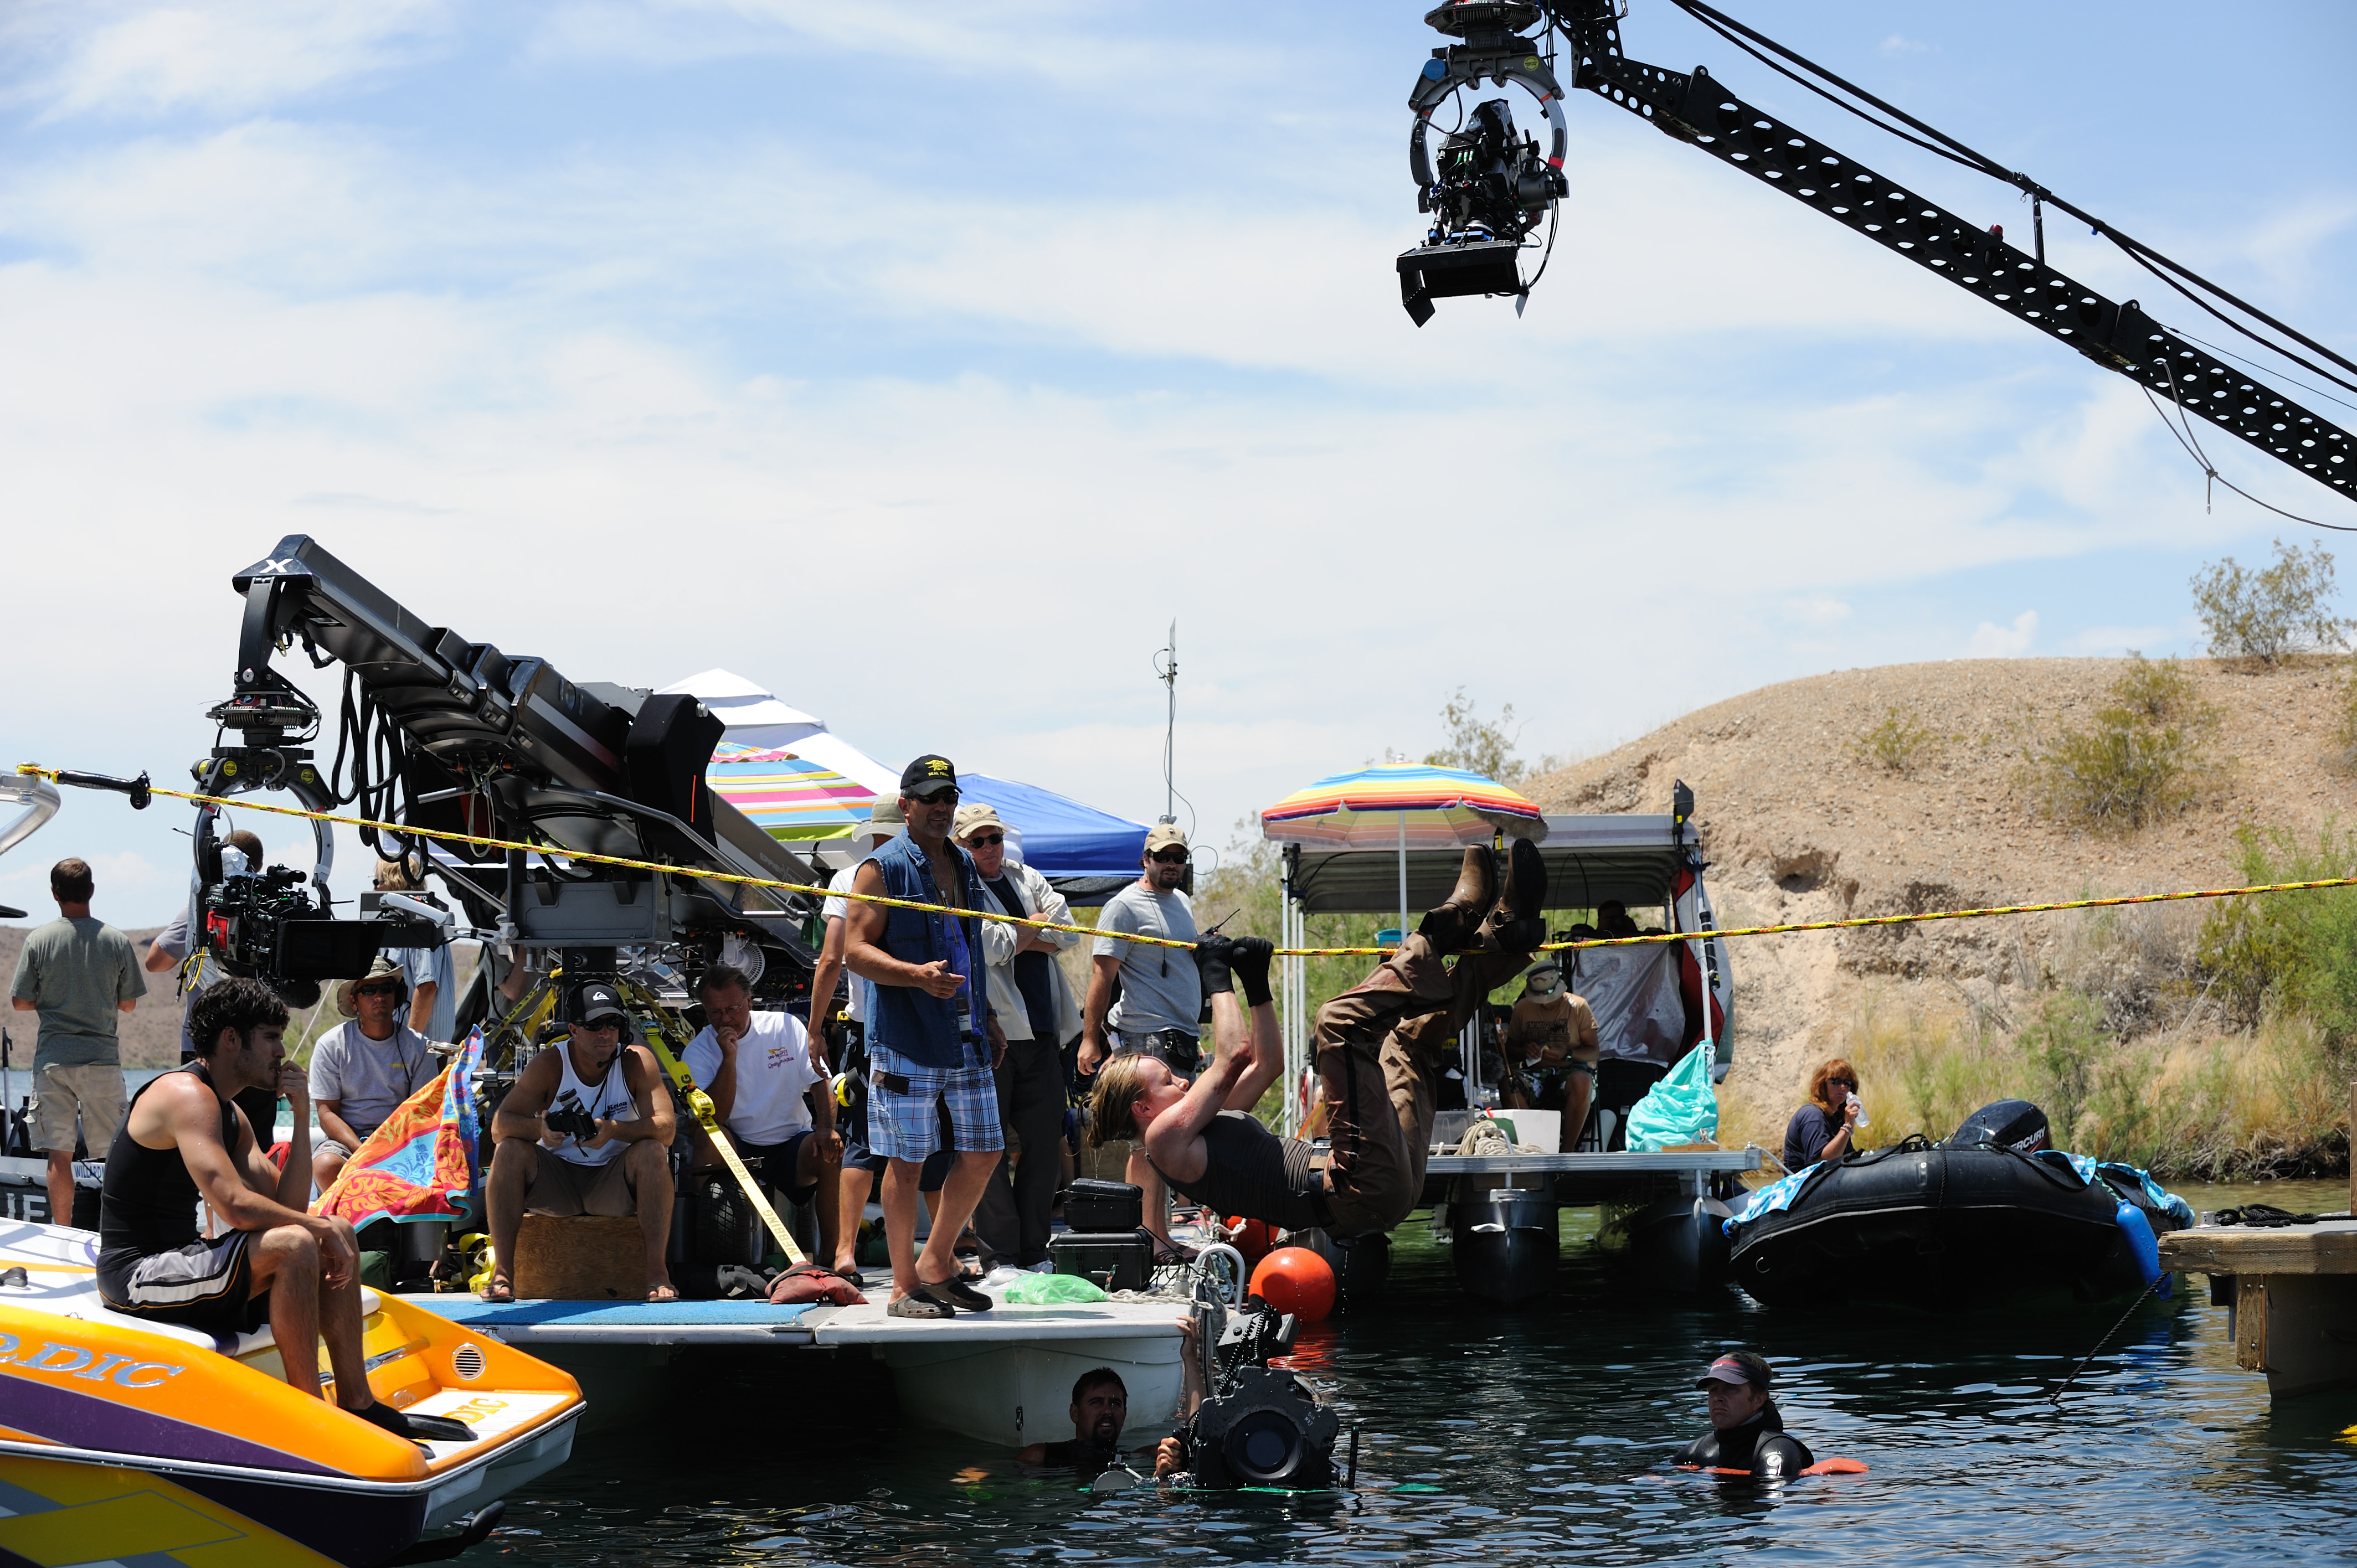 On the set of Piranha 3D stunt doubling Elisabeth Shue